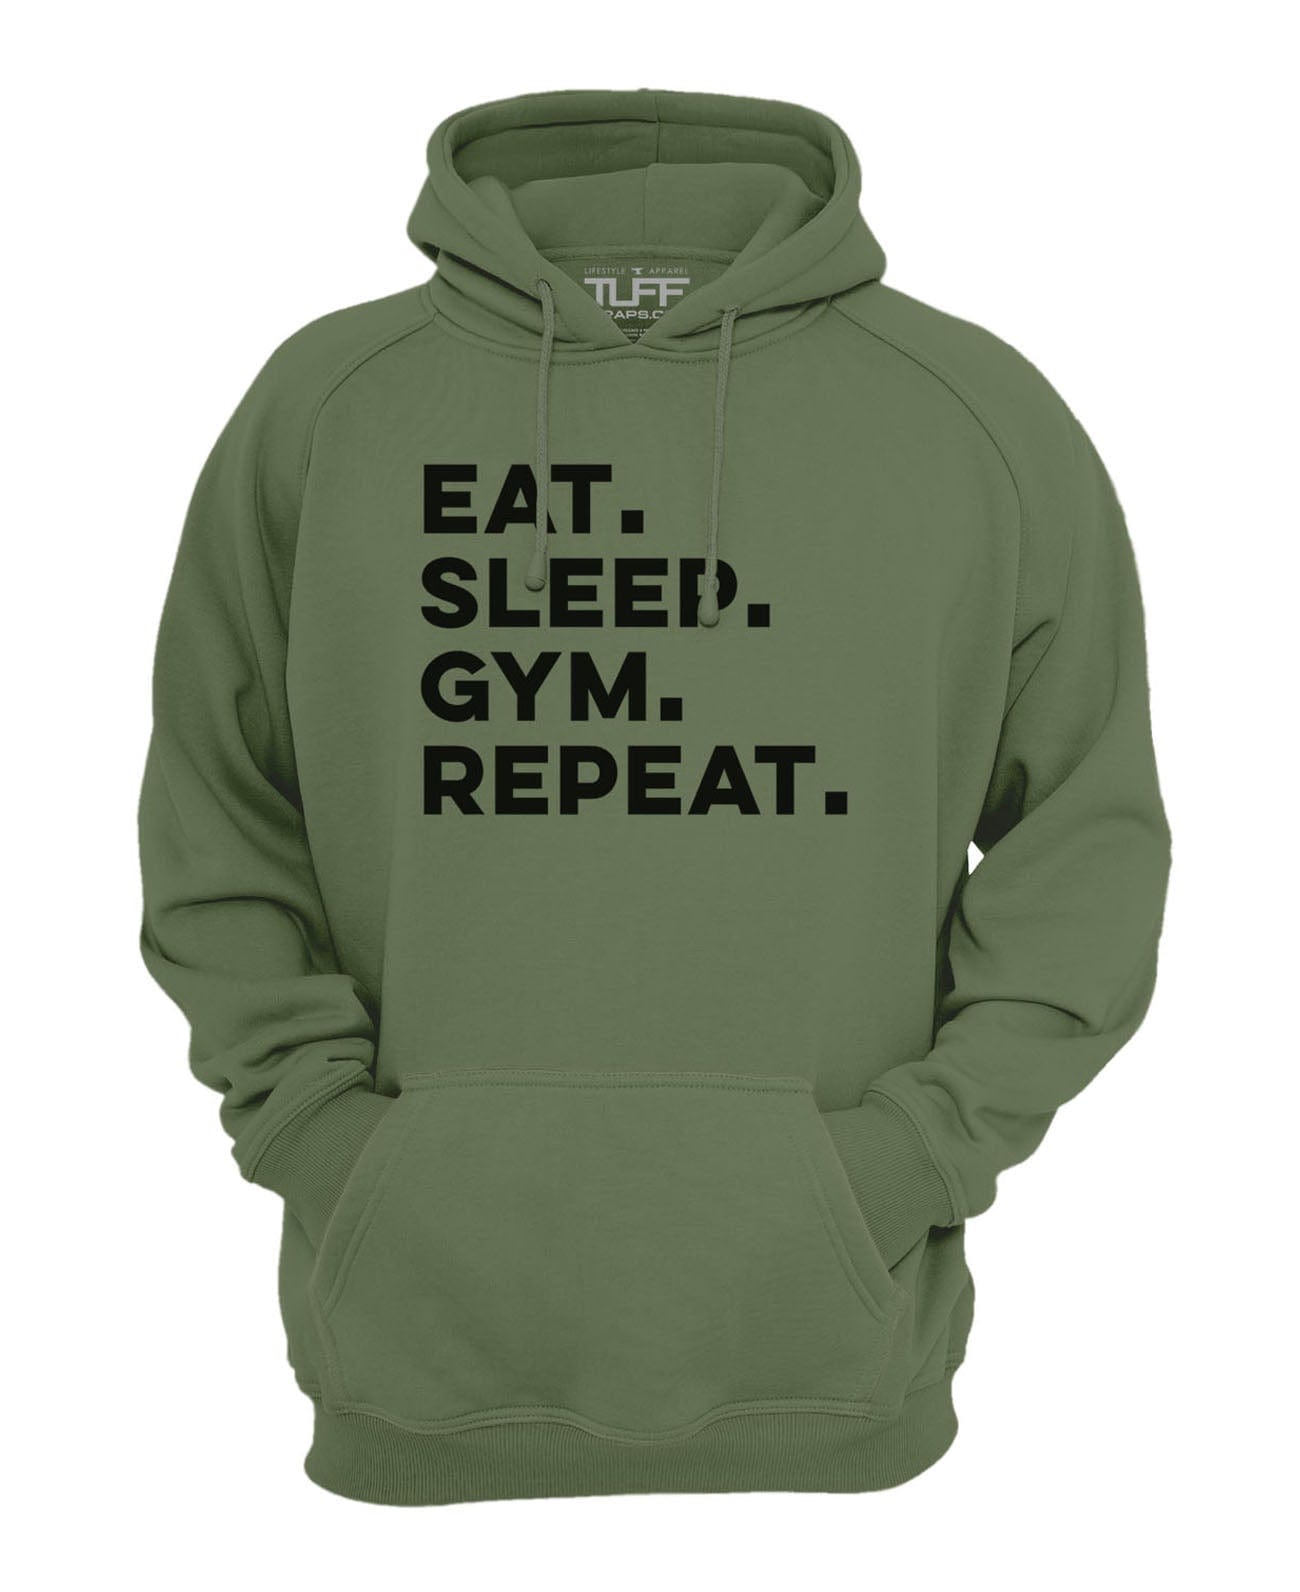 Eat. Sleep. Gym. Repeat. Hooded Sweatshirt Men's Sweatshirts